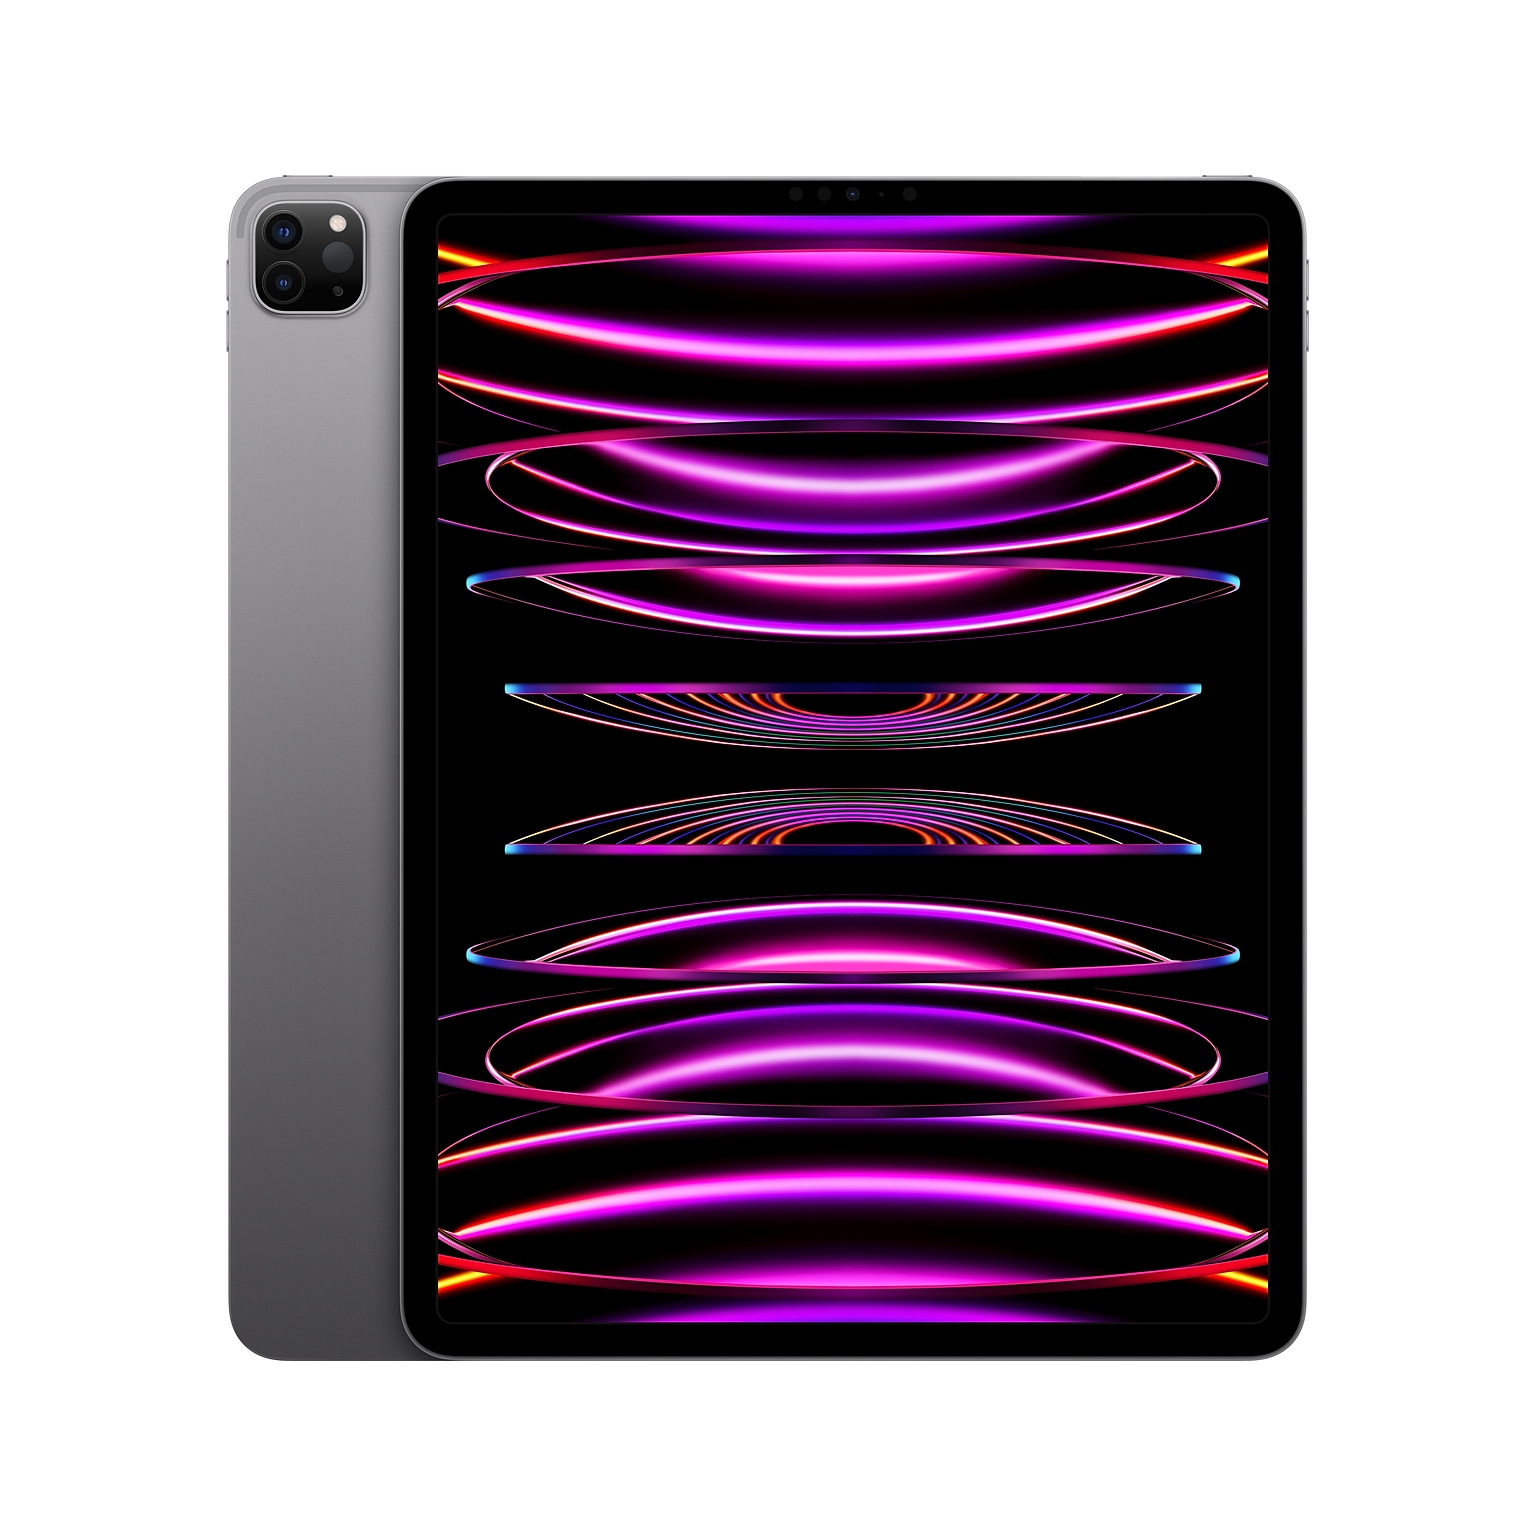 Apple iPad Pro 12.9 Tablet, 256GB, WiFi, 6th Generation, Space Gray (MNXR3LL/A)